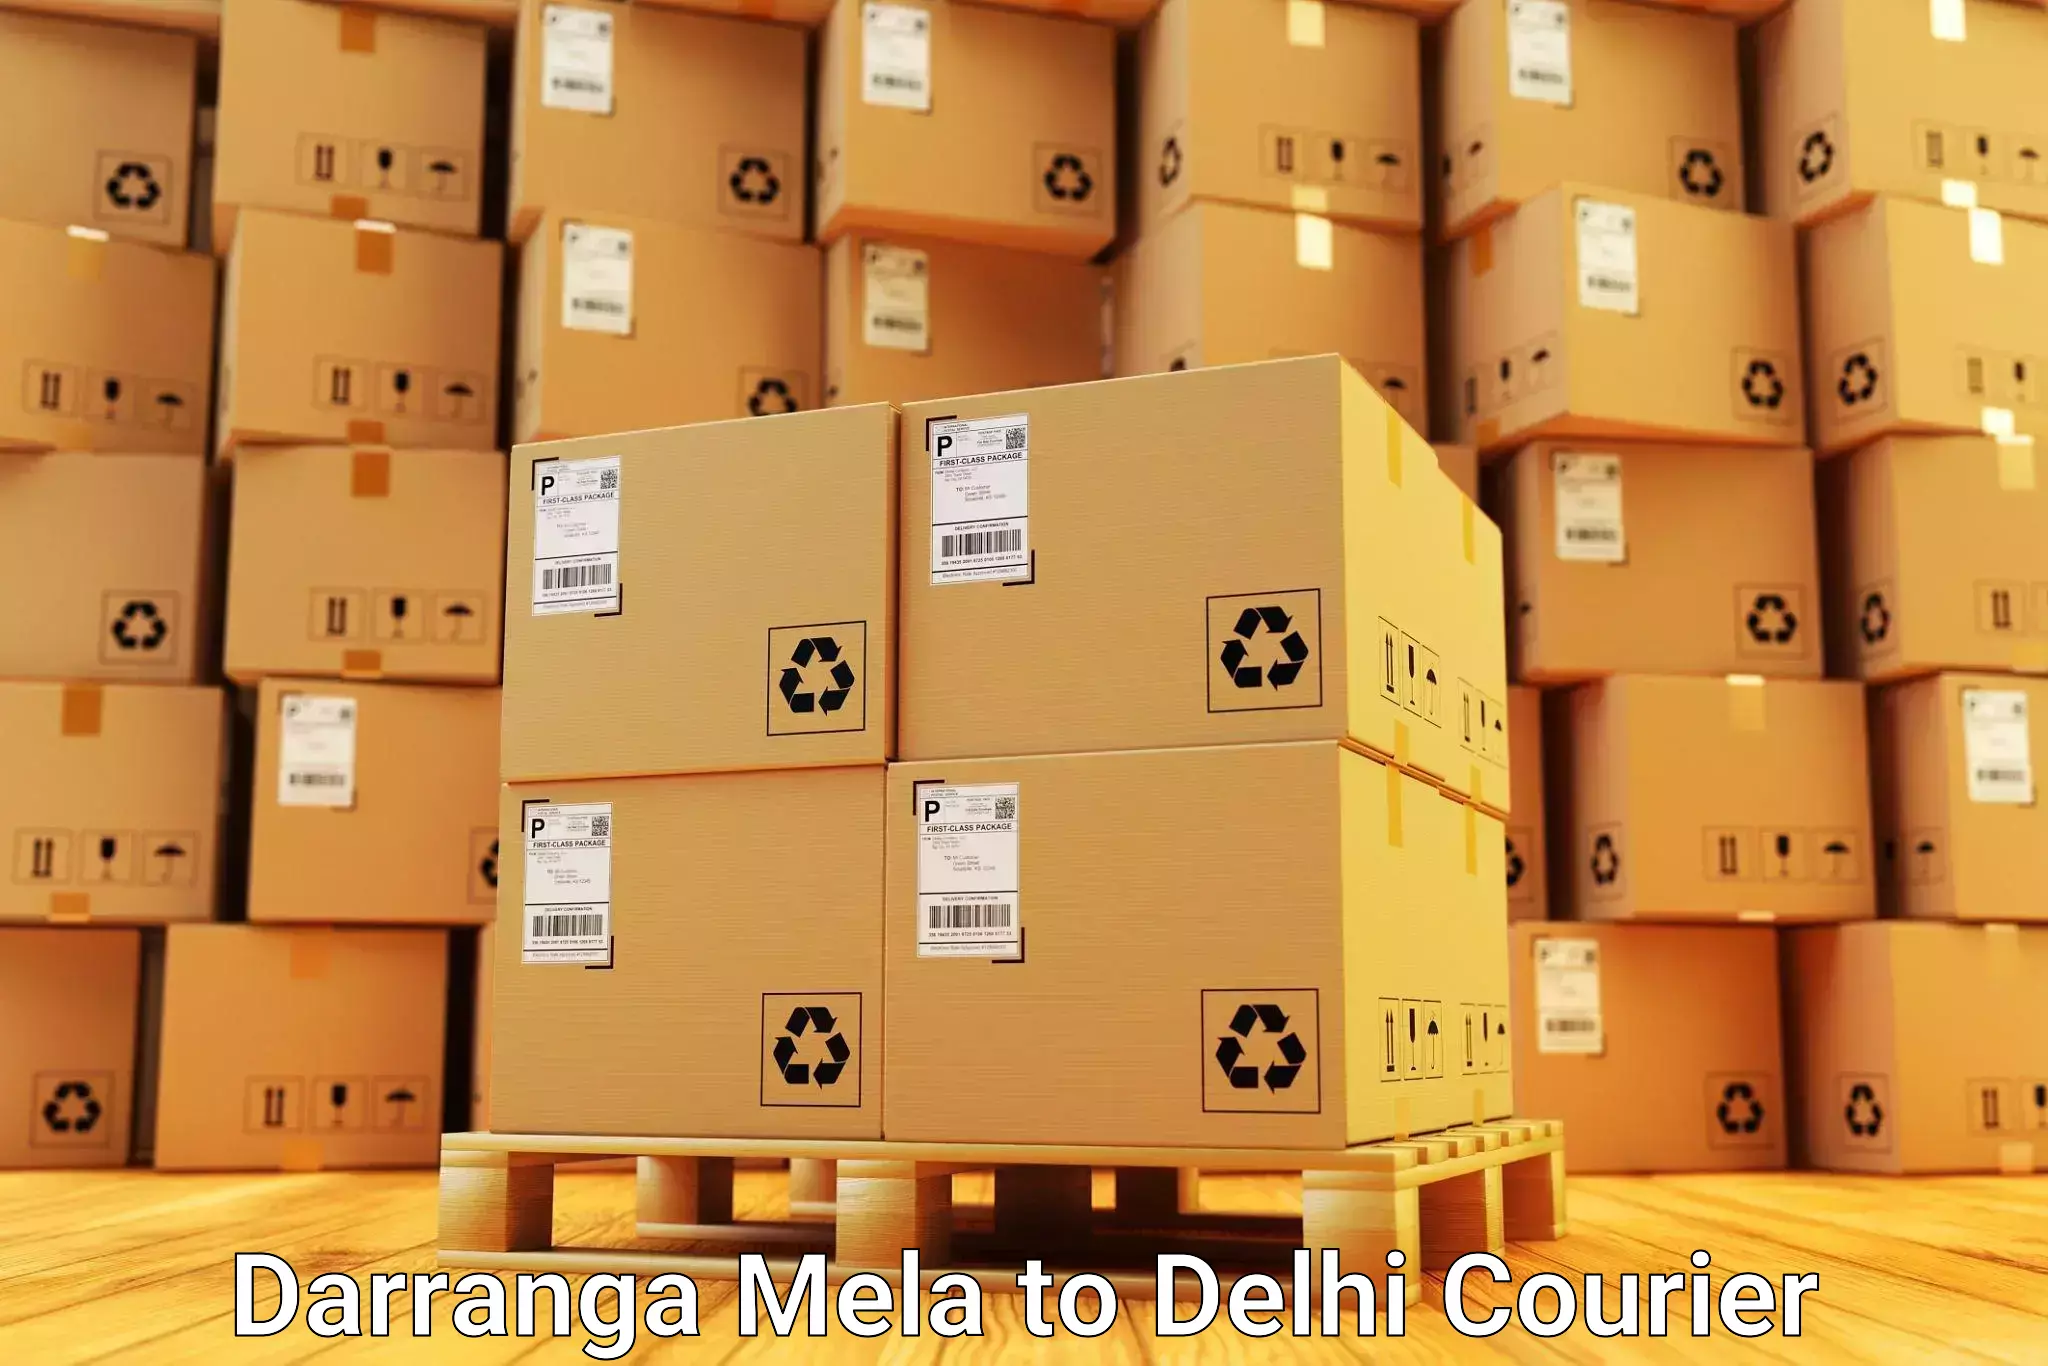 Professional moving company in Darranga Mela to East Delhi